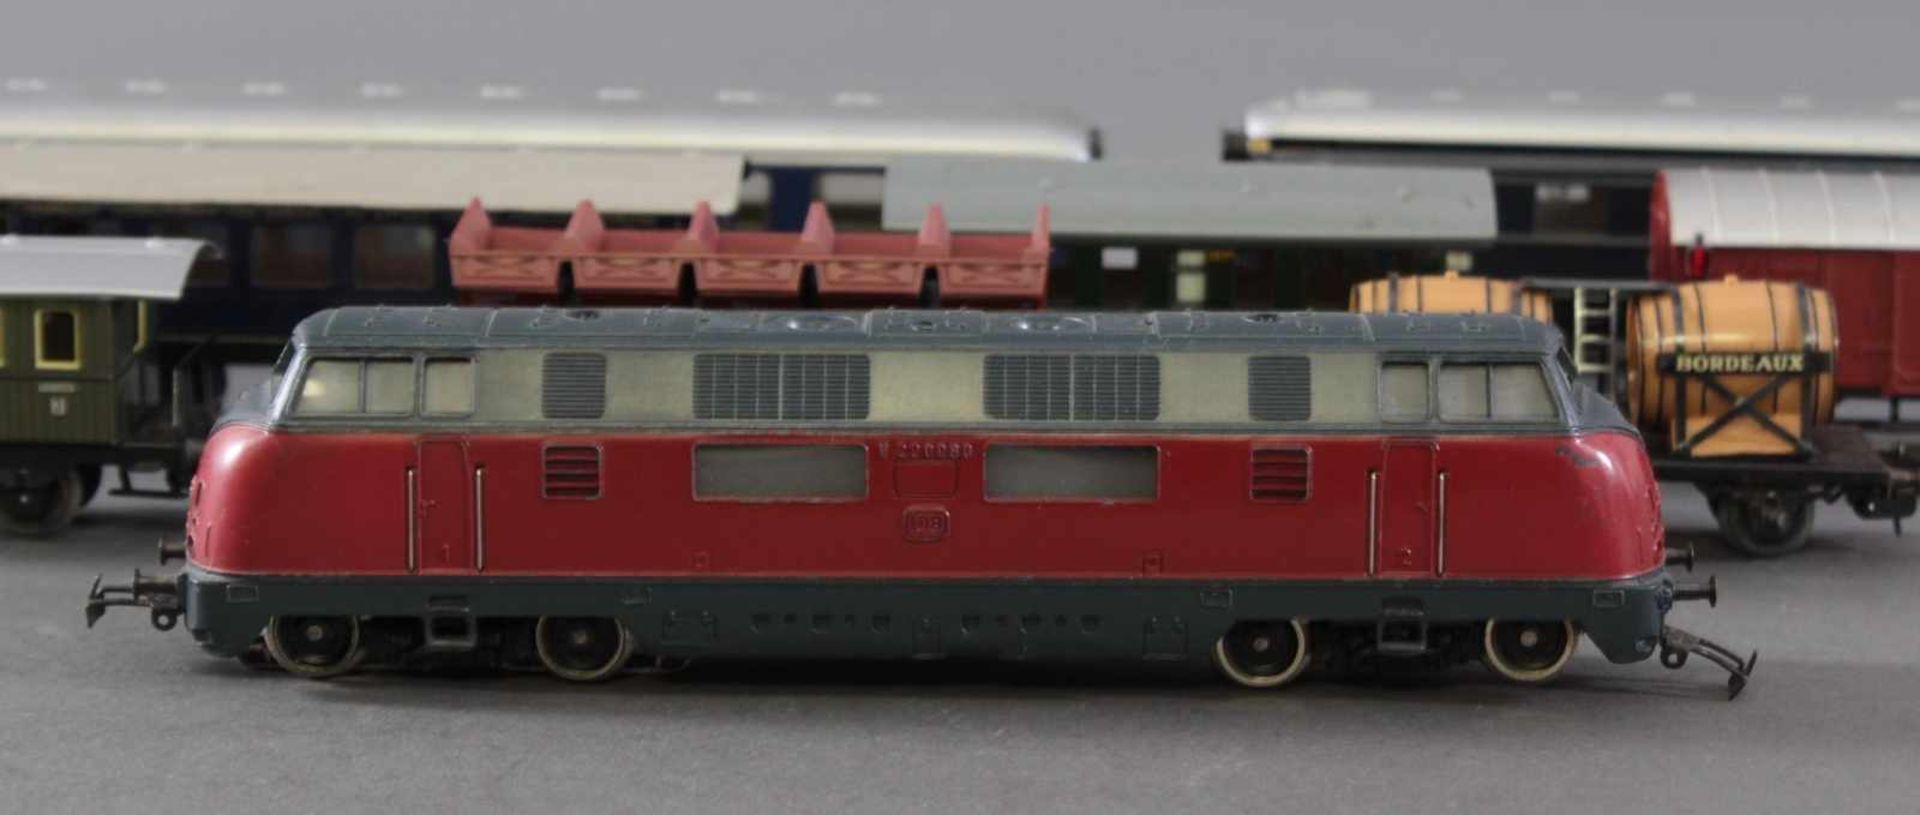 Märklin E-Lok V 200060 mit 3 Güter- und 5 Personenwaggons, Spur H0E-Lok in rot, aus Kunststoff und - Image 3 of 3